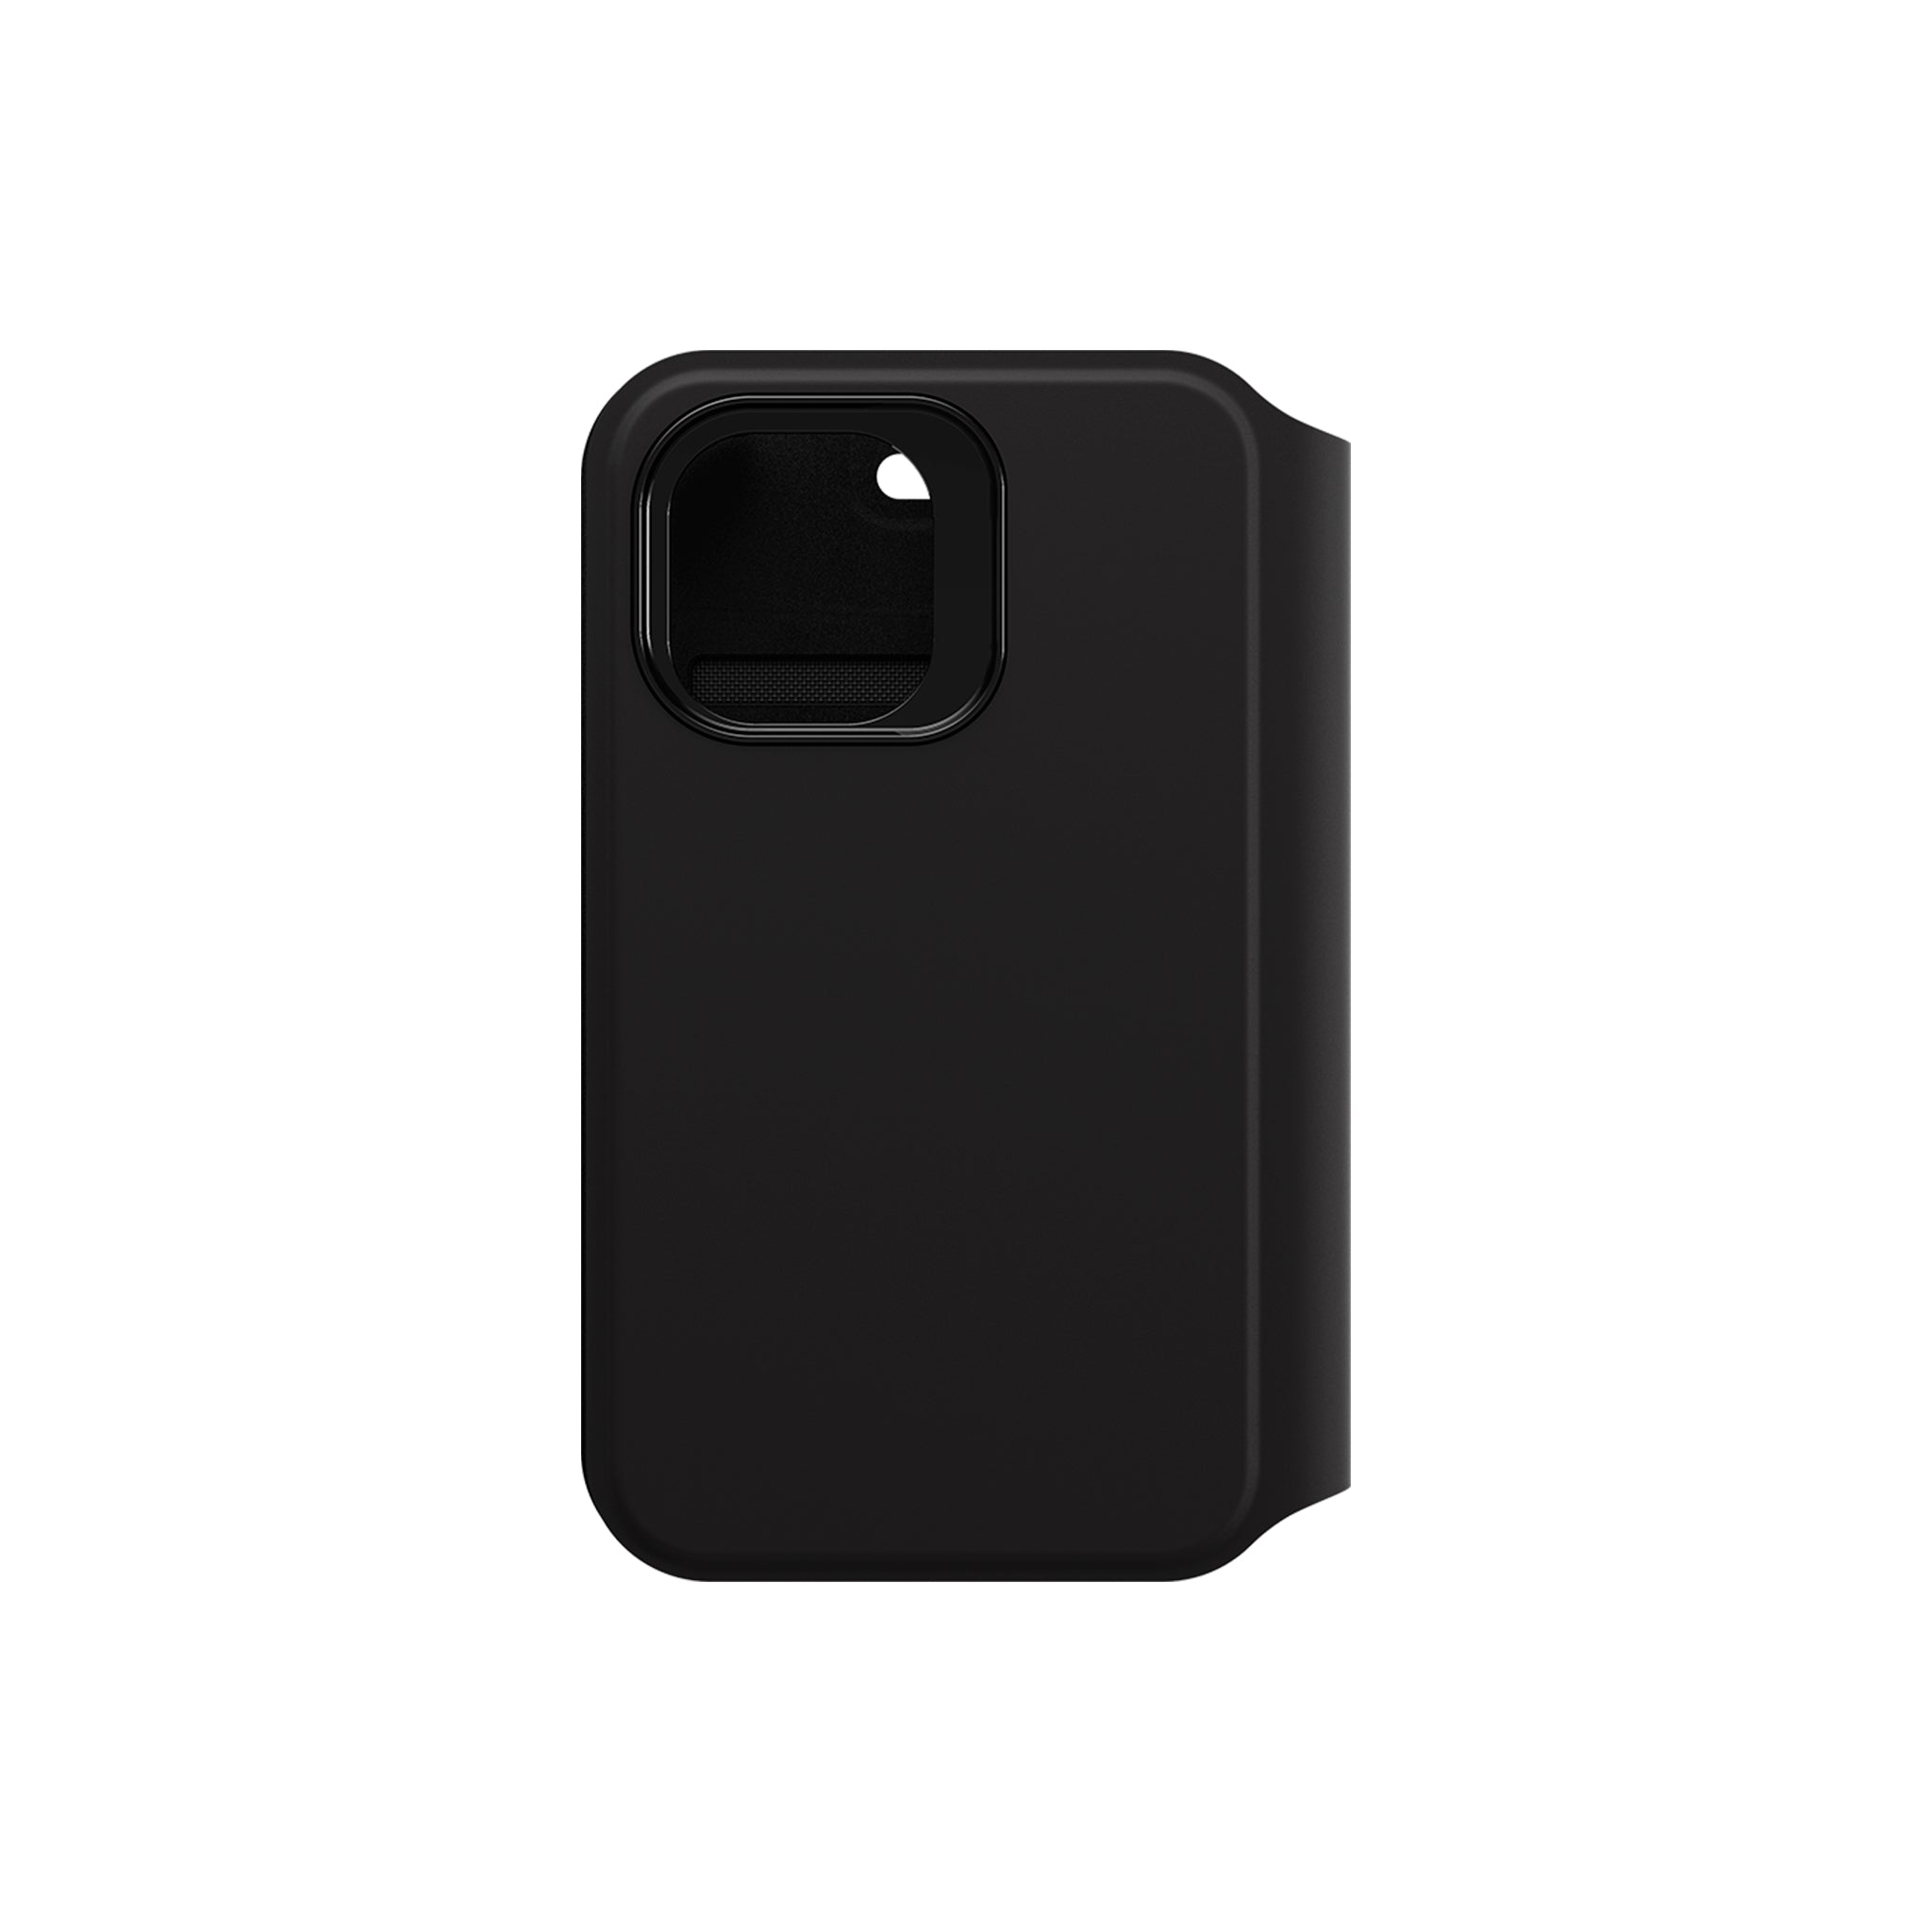 OtterBox - Strada Via for iPhone 12 mini - Black Nigth